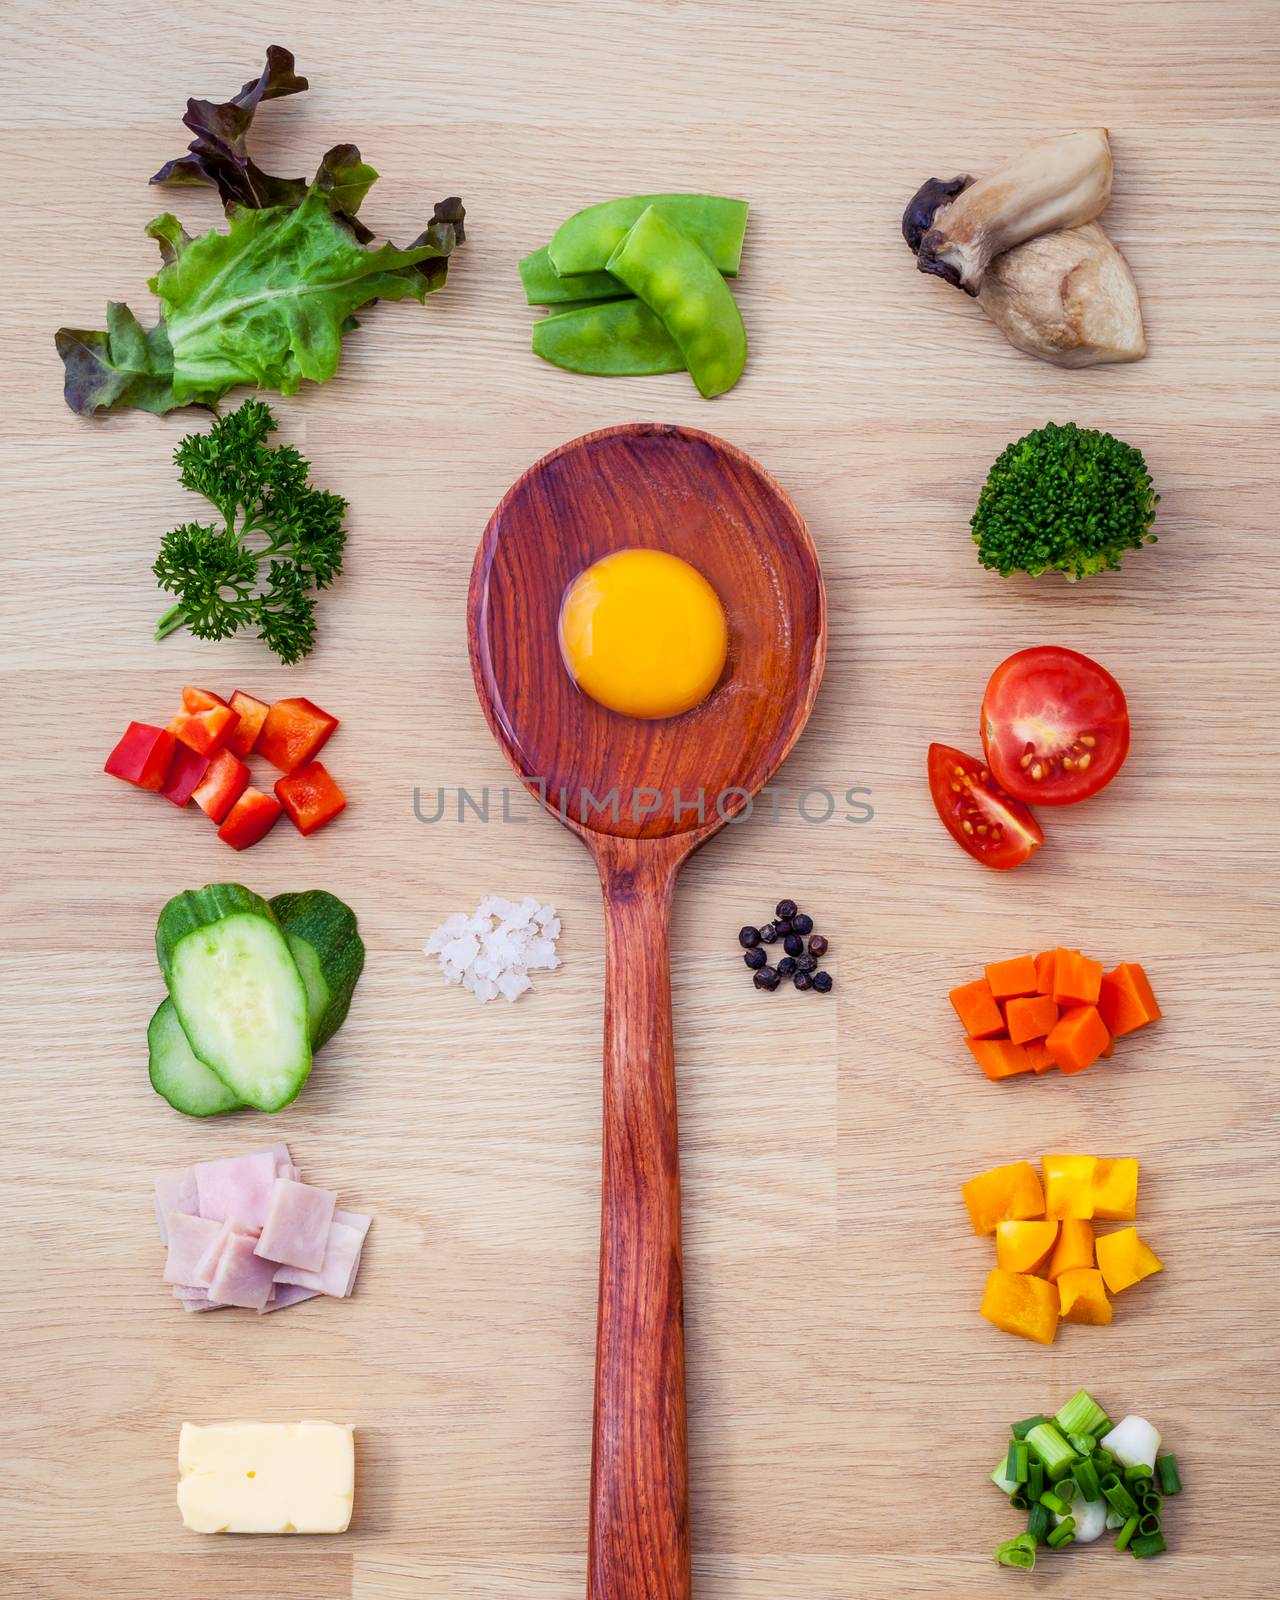 Ingredients of homemade omelet on wooden panel.Various vegetable by kerdkanno